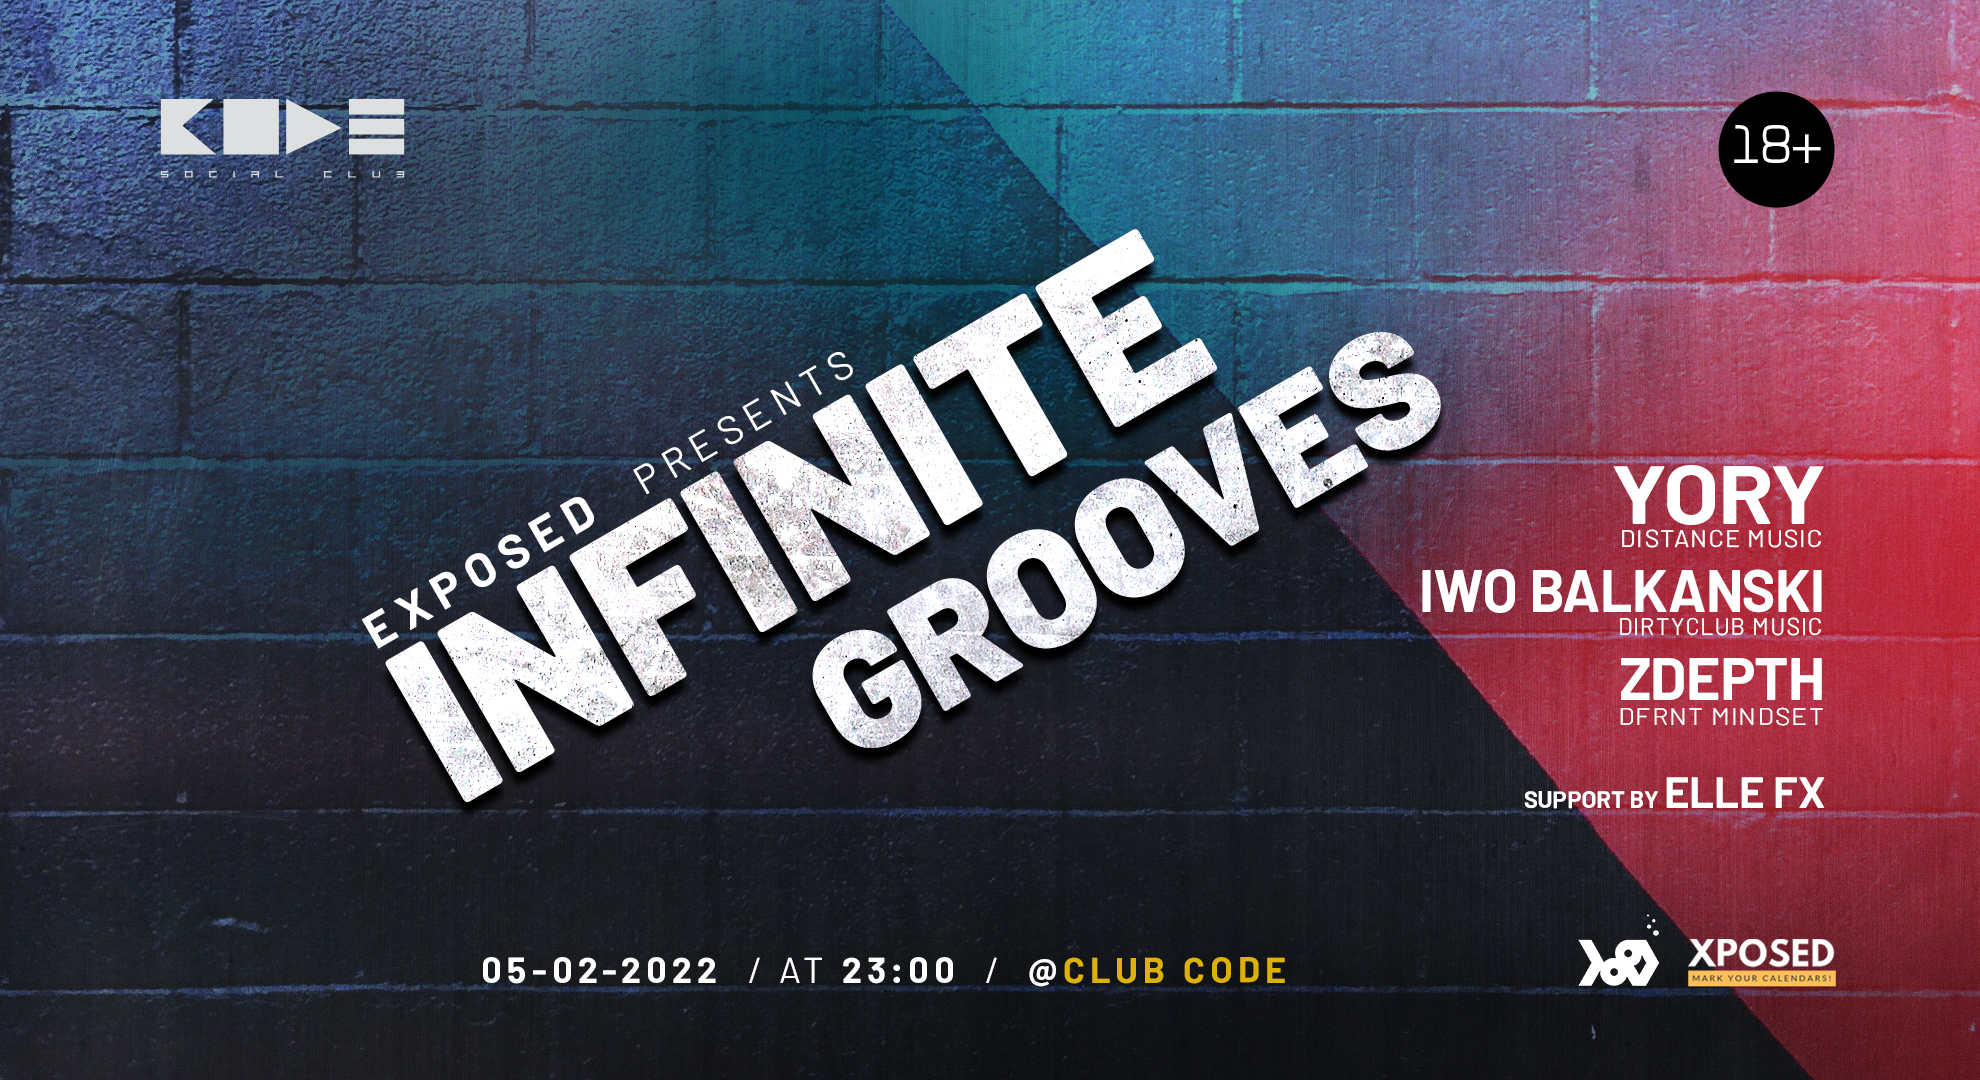 Exposed pres. Infinite Grooves Plovdiv